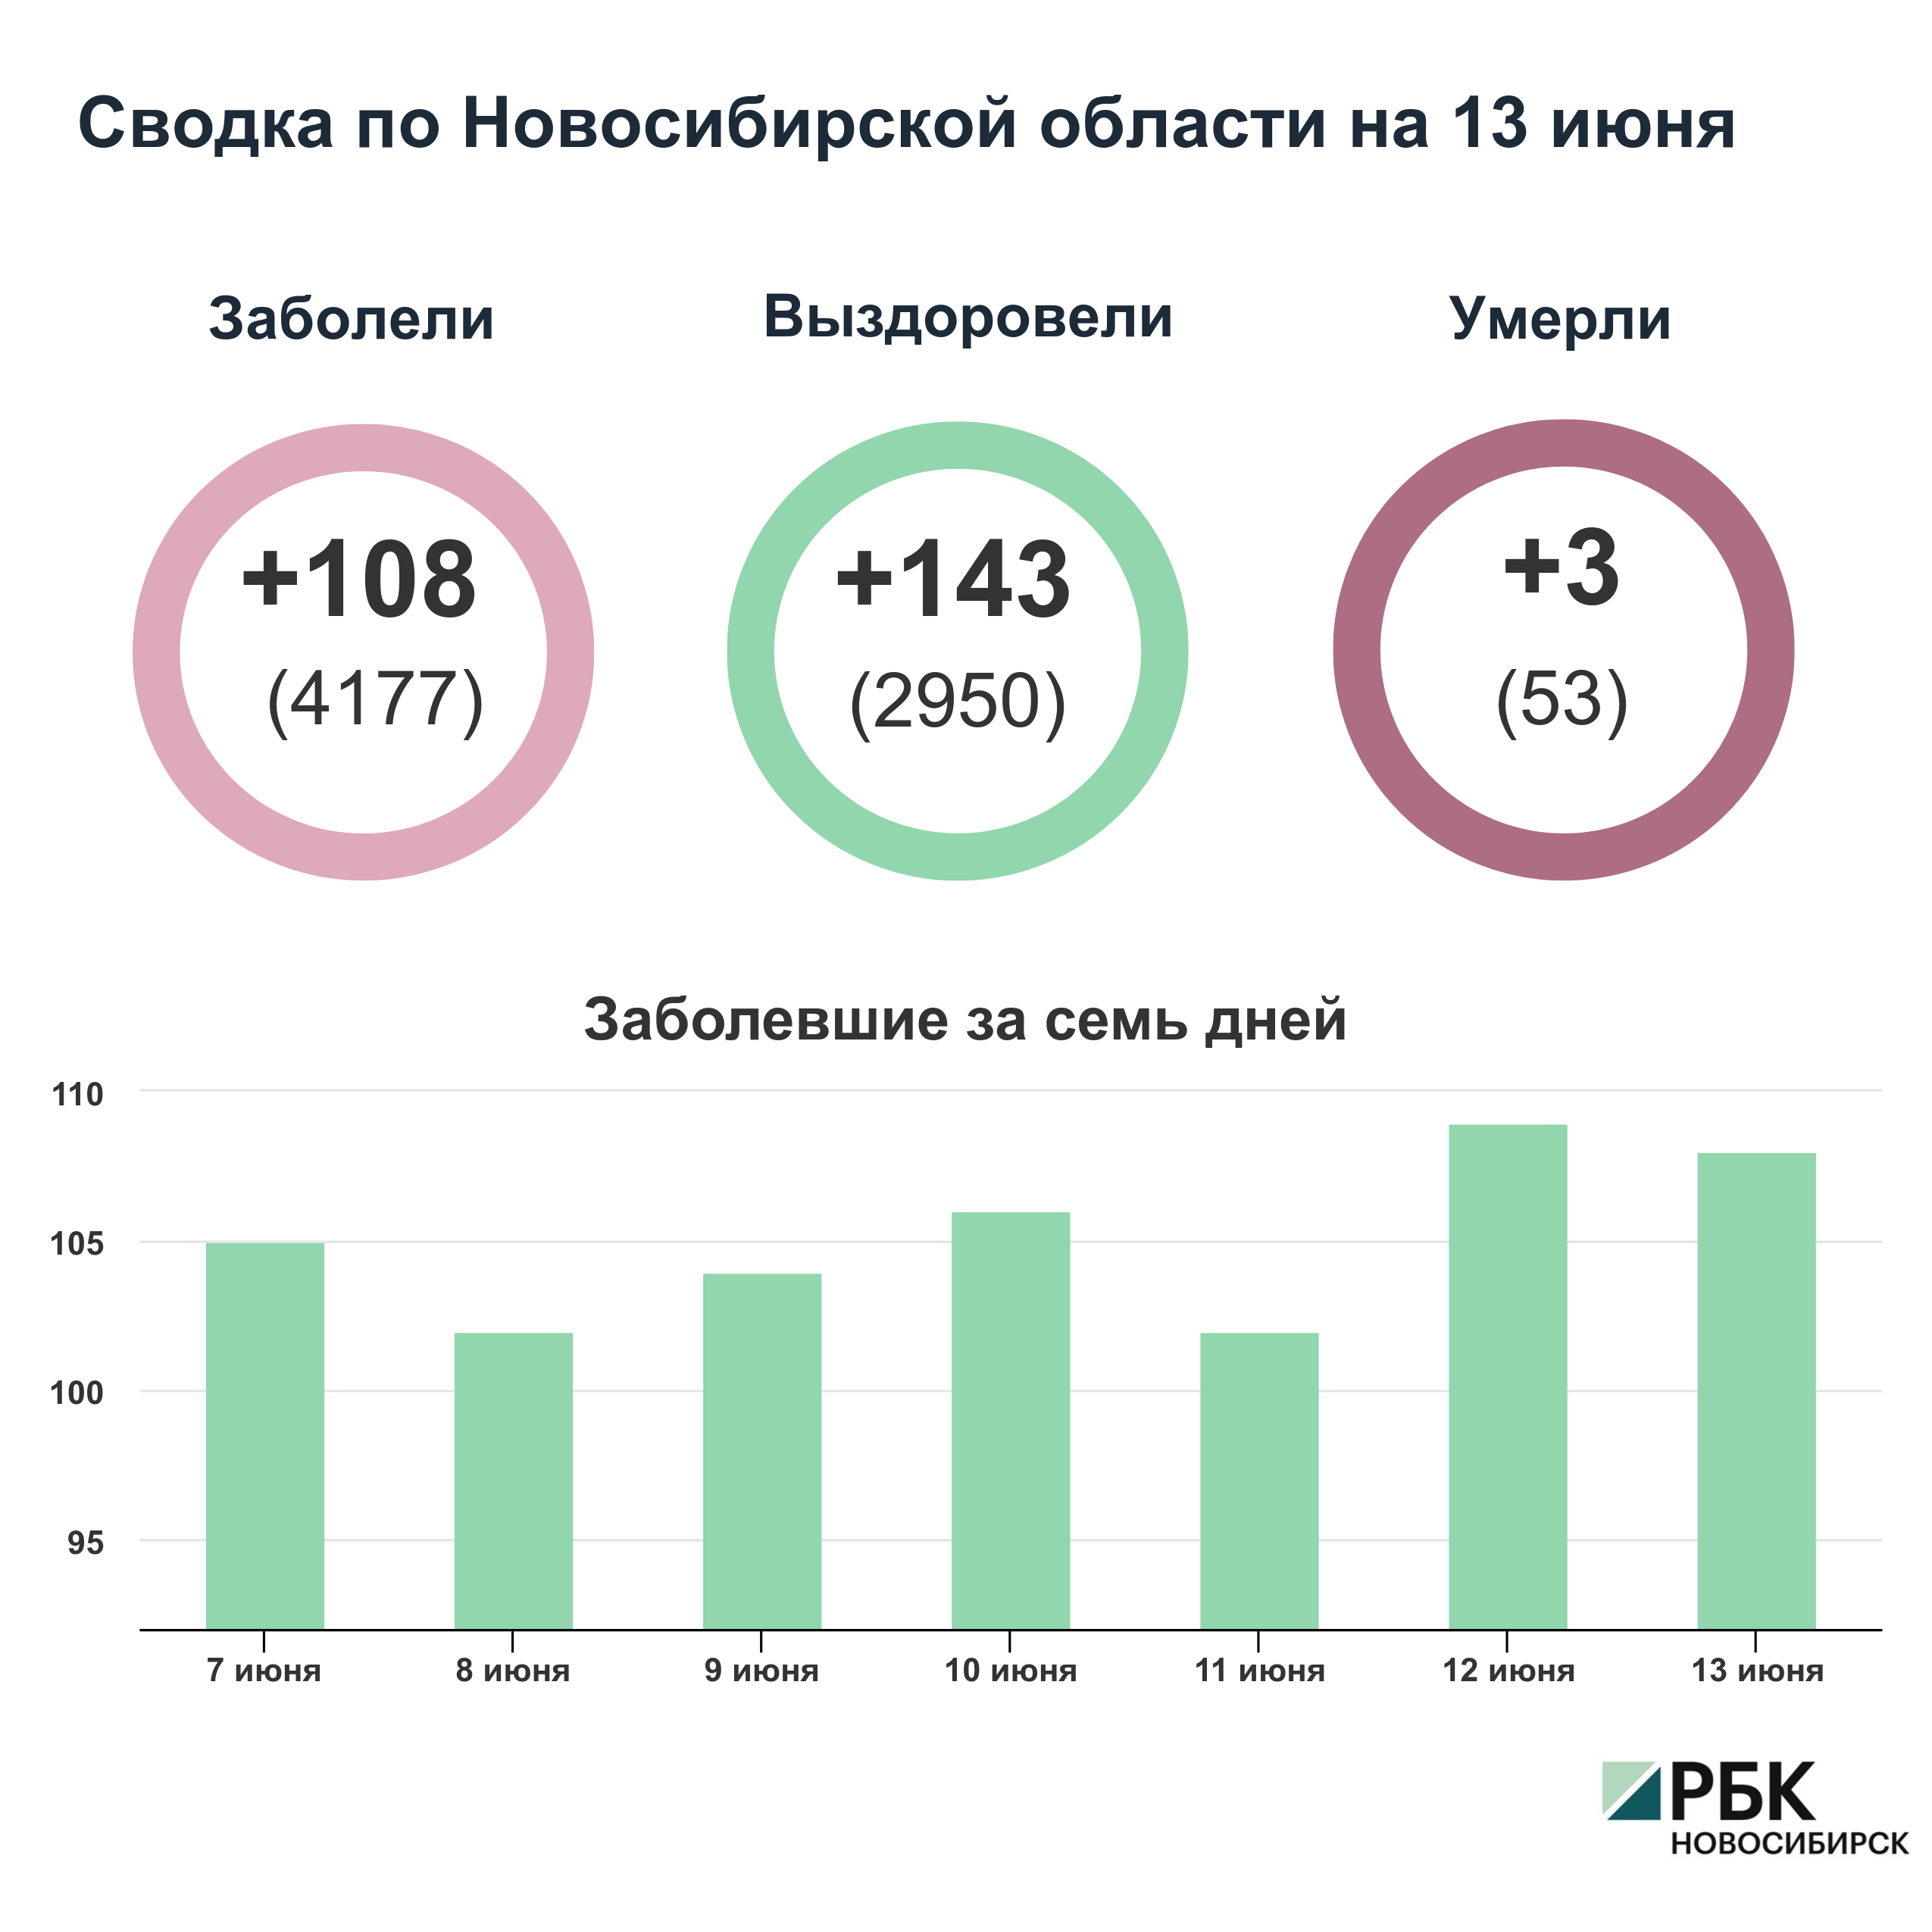 Коронавирус в Новосибирске: сводка на 13 июня